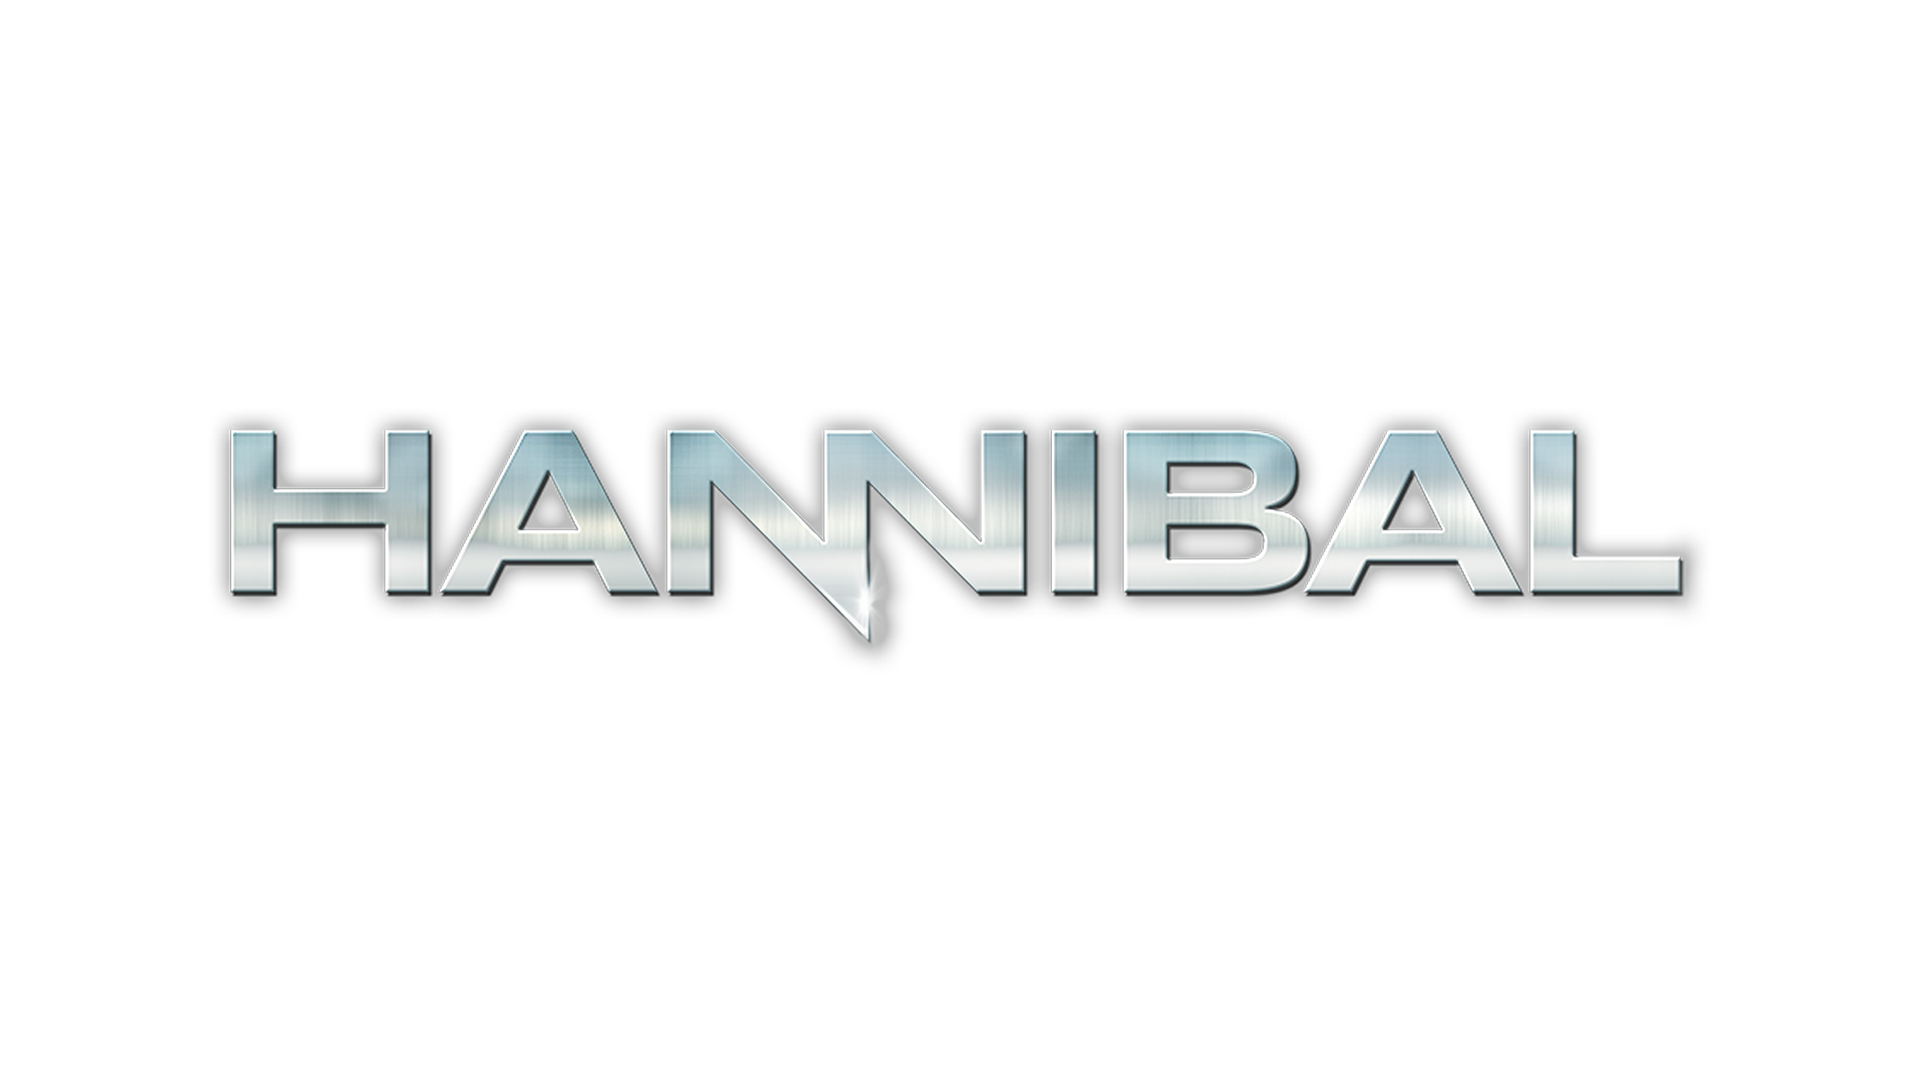 hannibal season 3 sub indo download